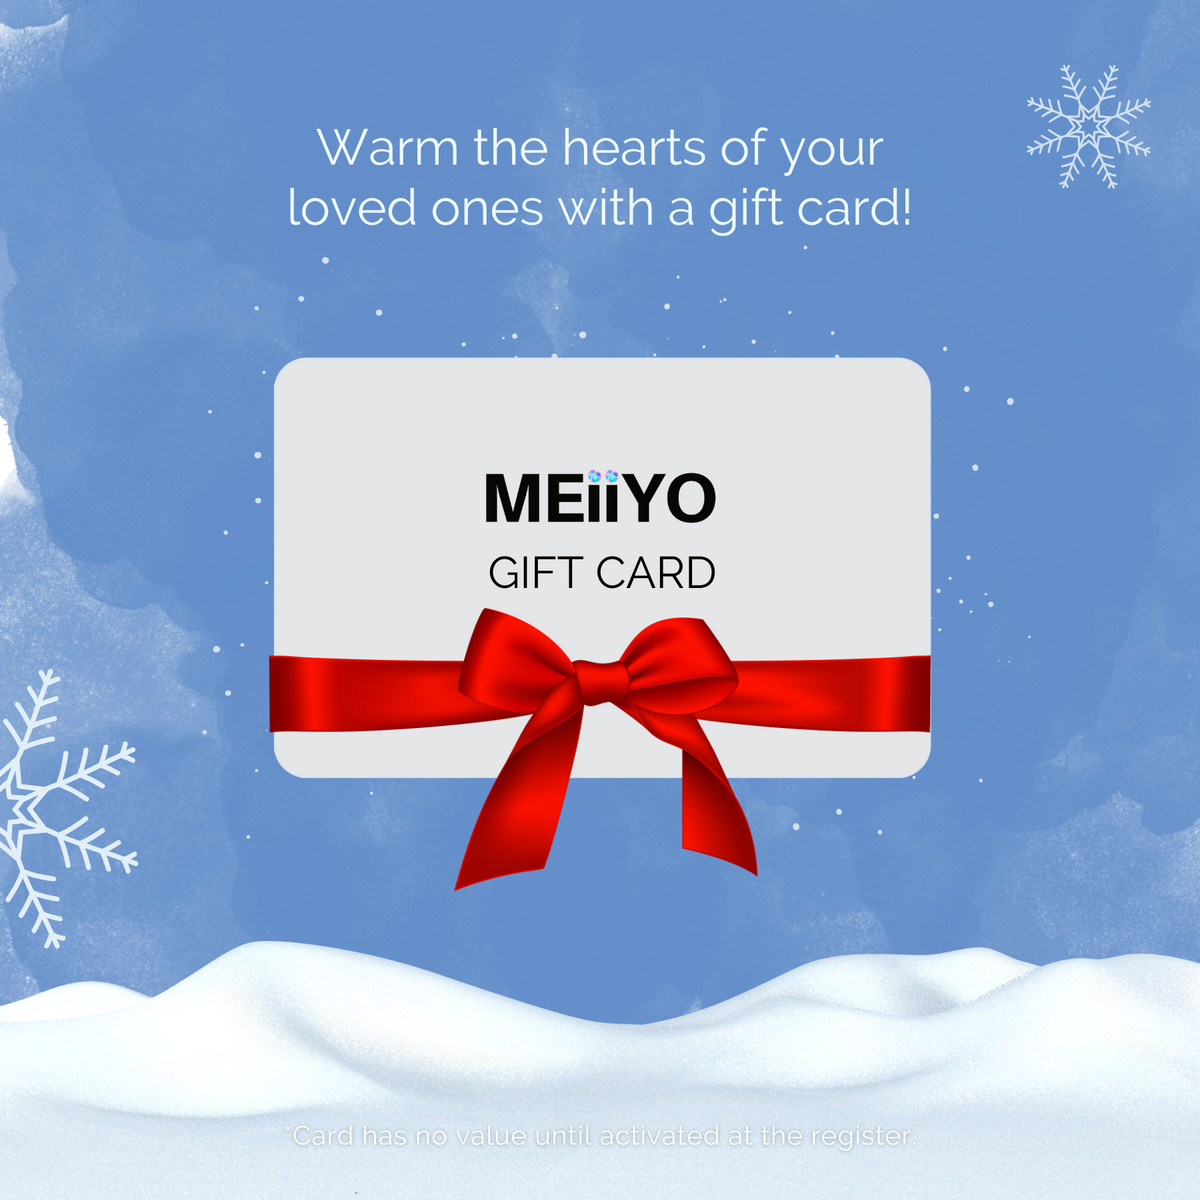 MEiiYO Gift Card